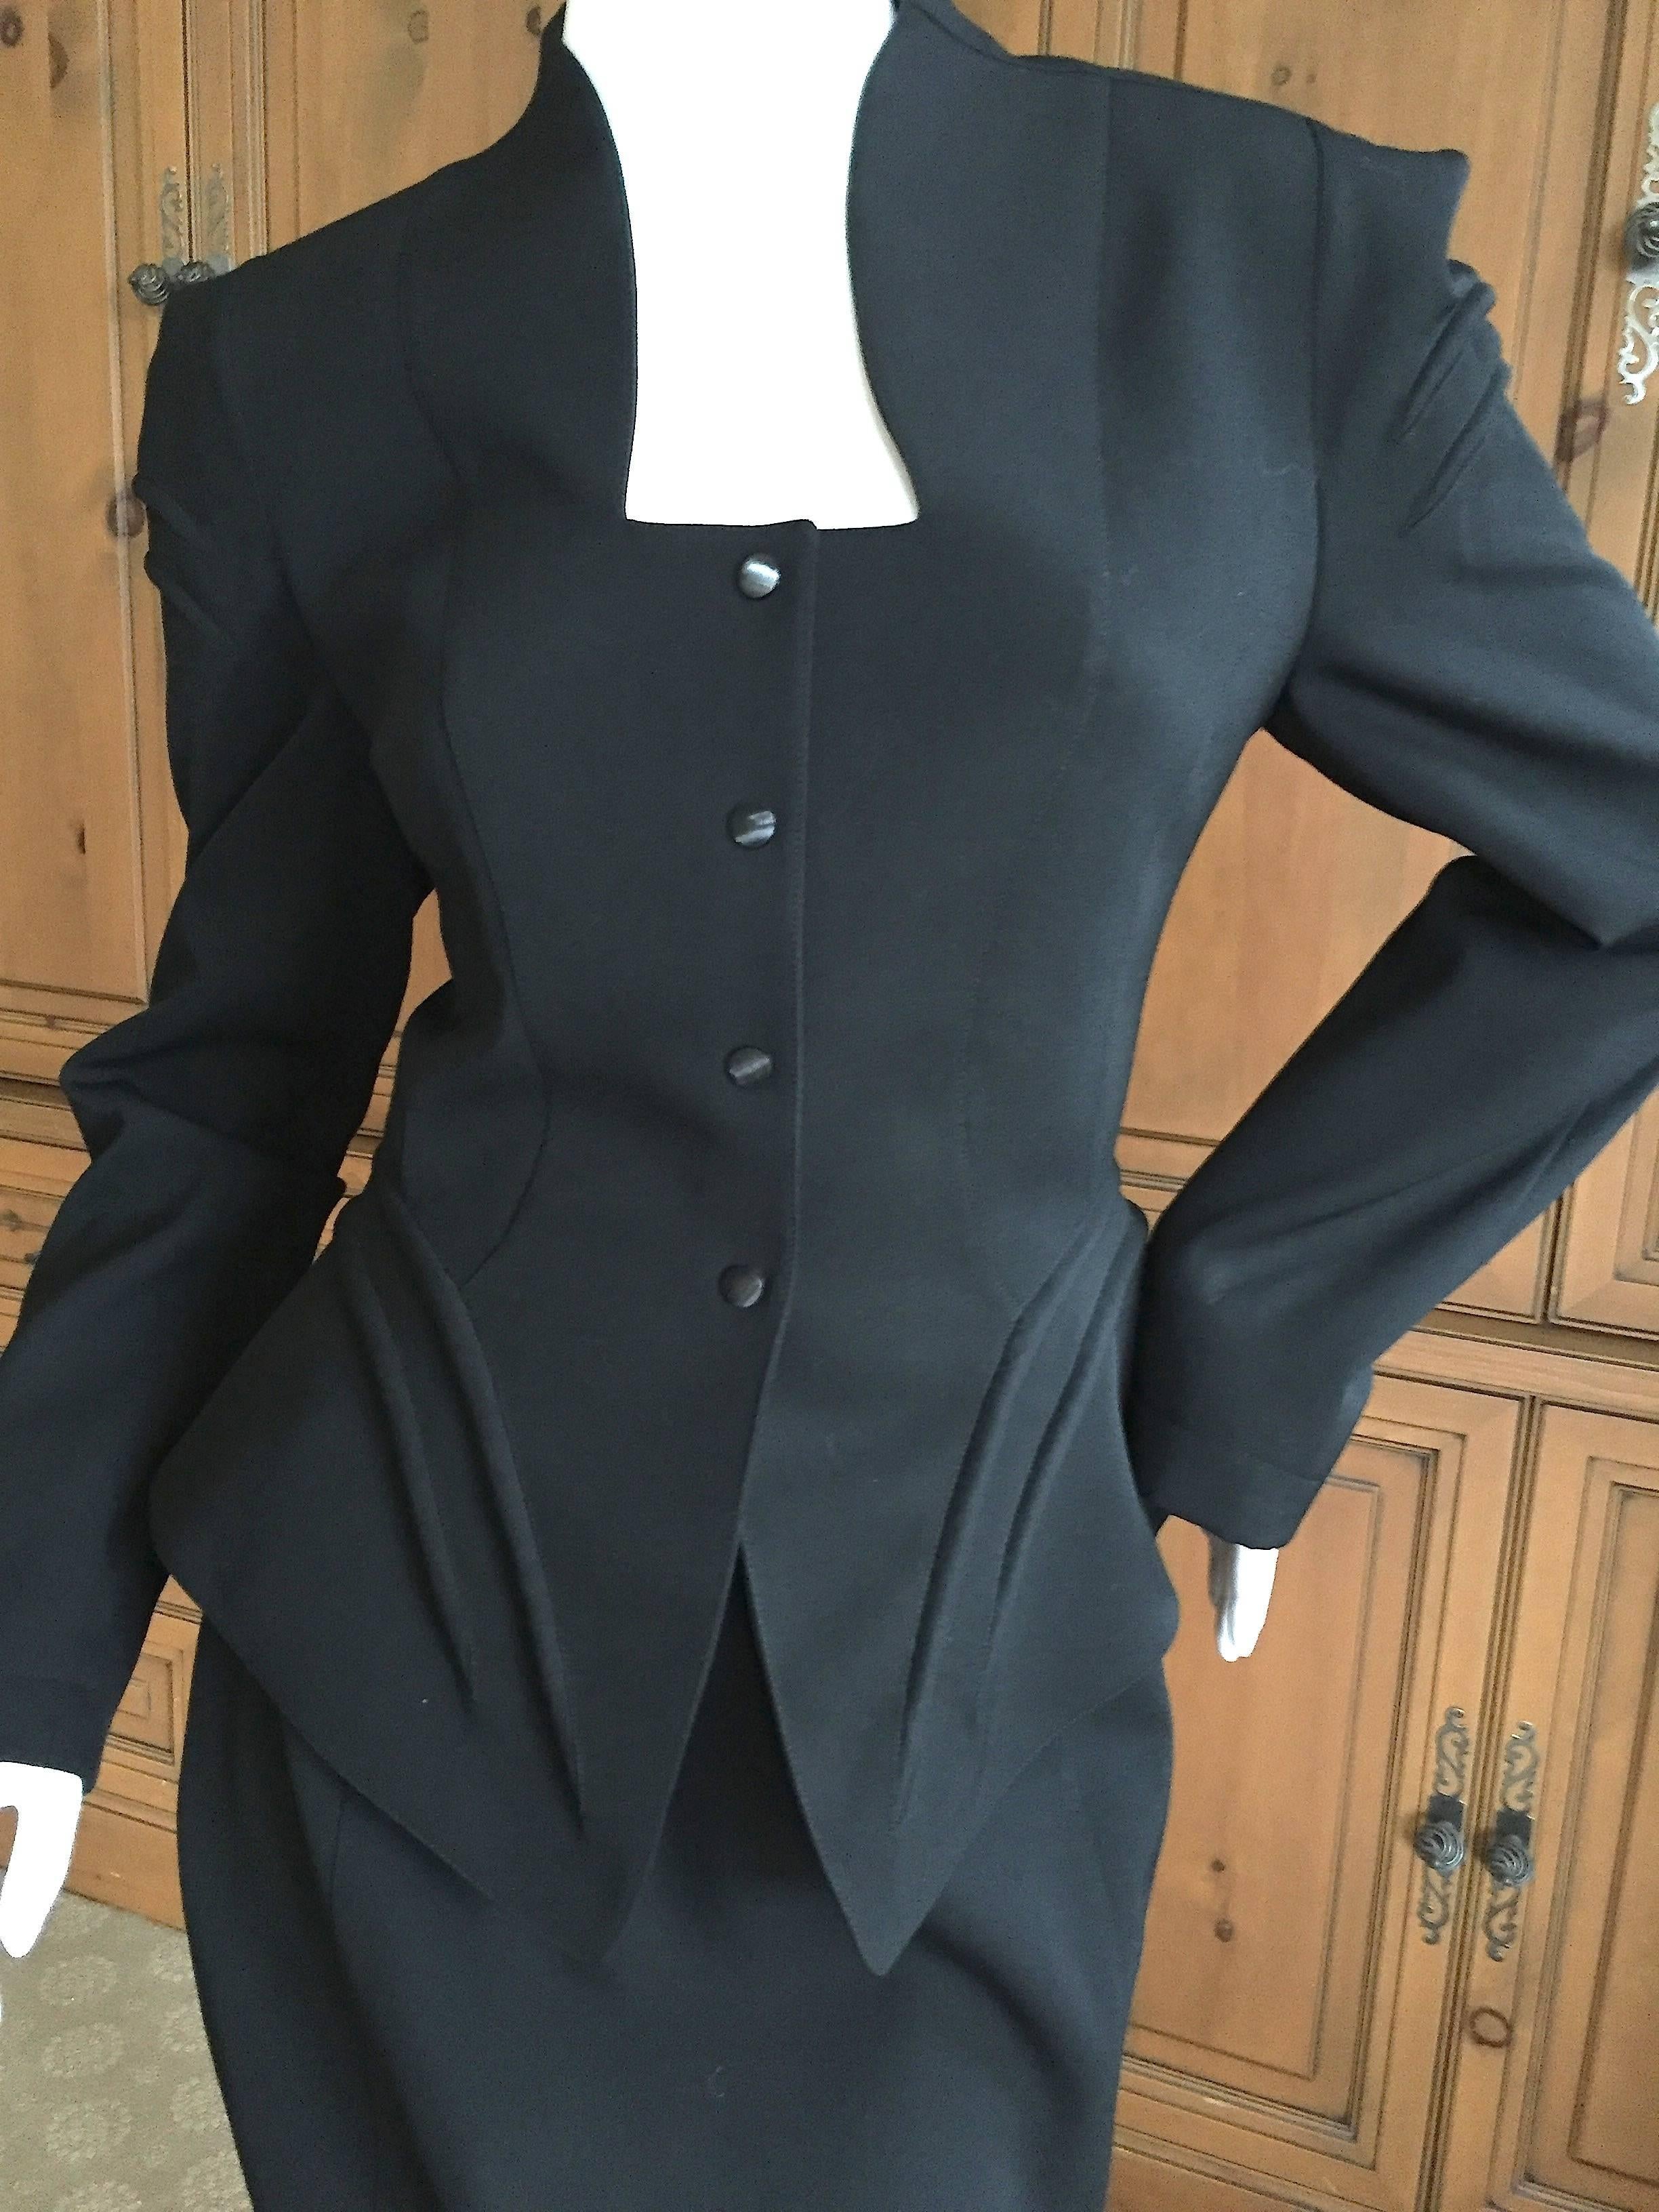 Thierry Mugler Vintage 80's Black Evening Suit Size 40 For Sale 5